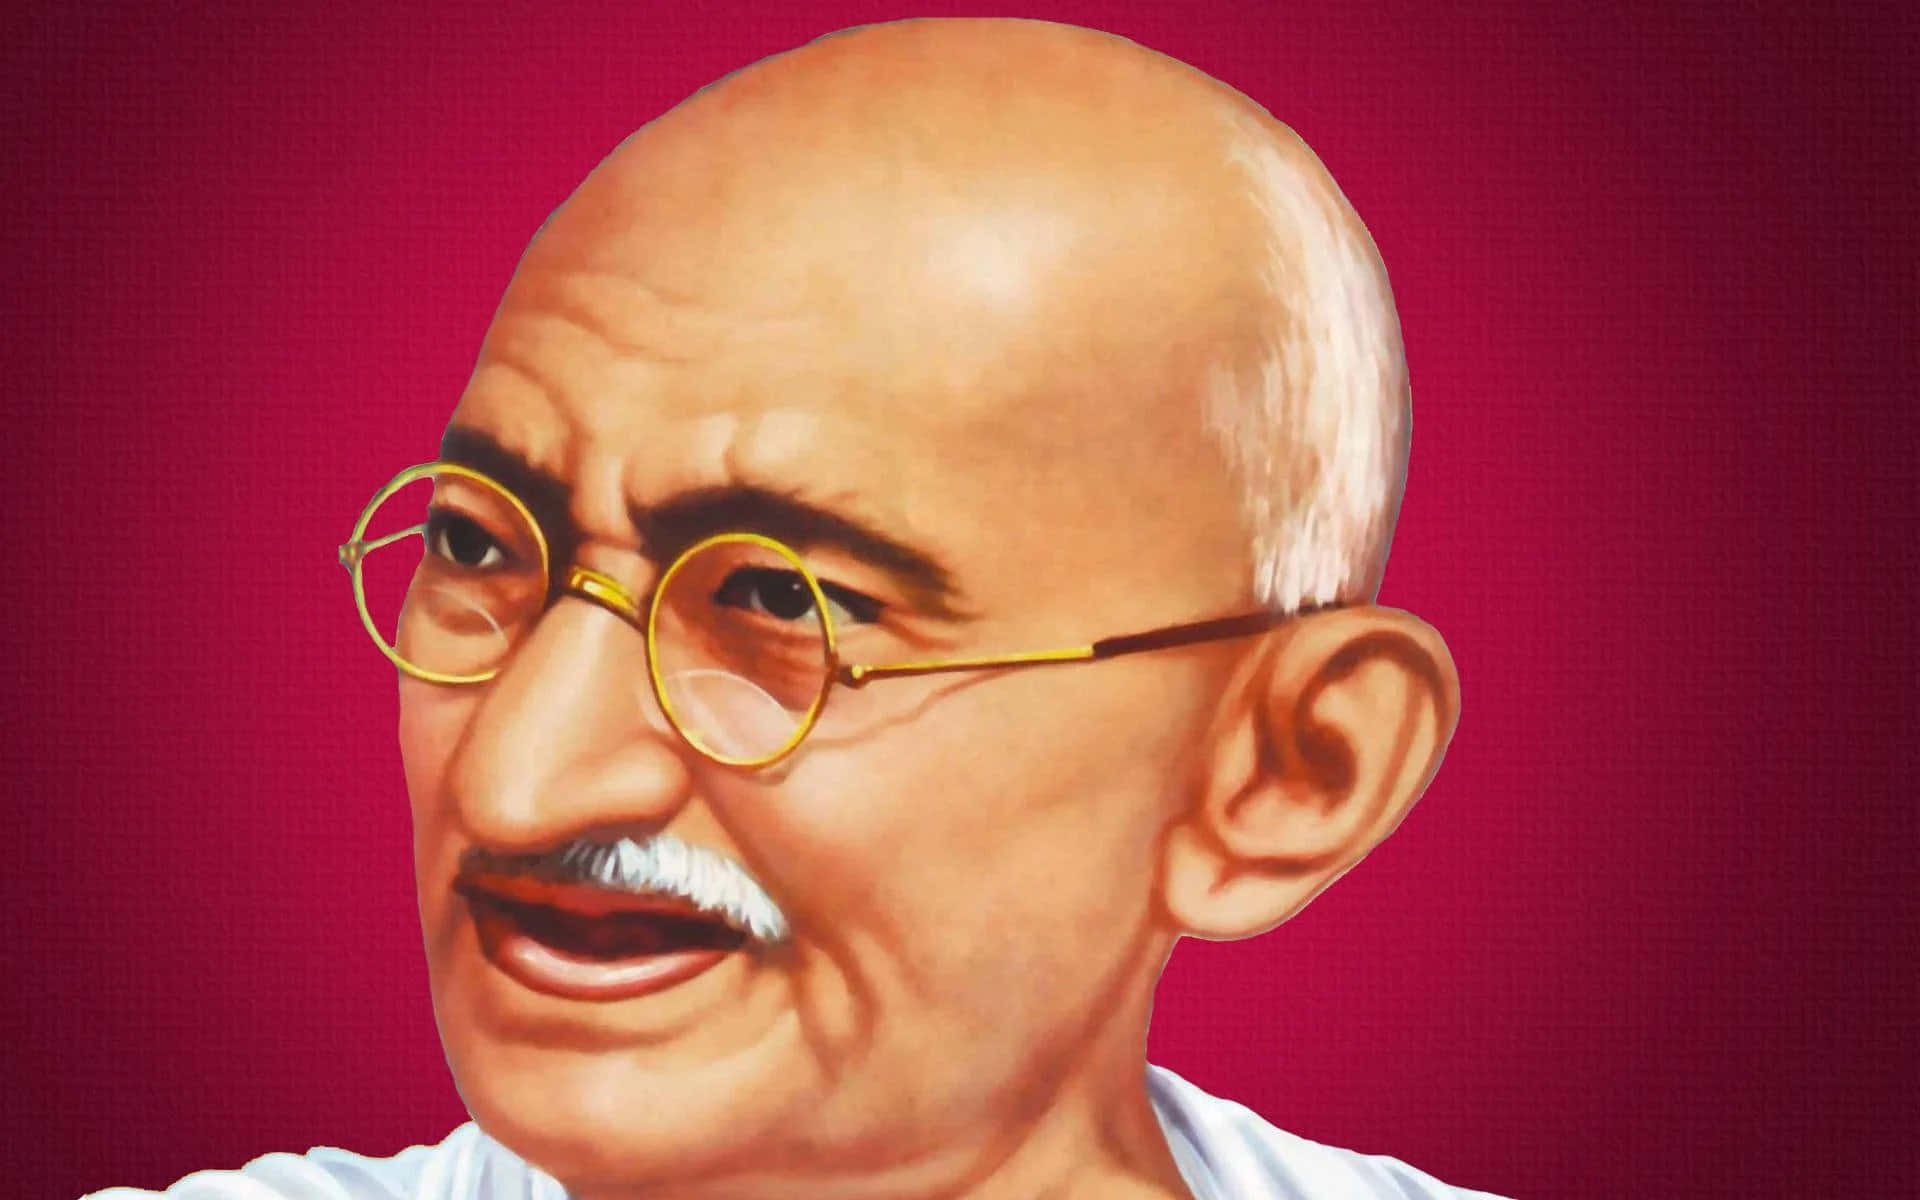 Mahatma Gandhi, champion of nonviolent civil disobedience